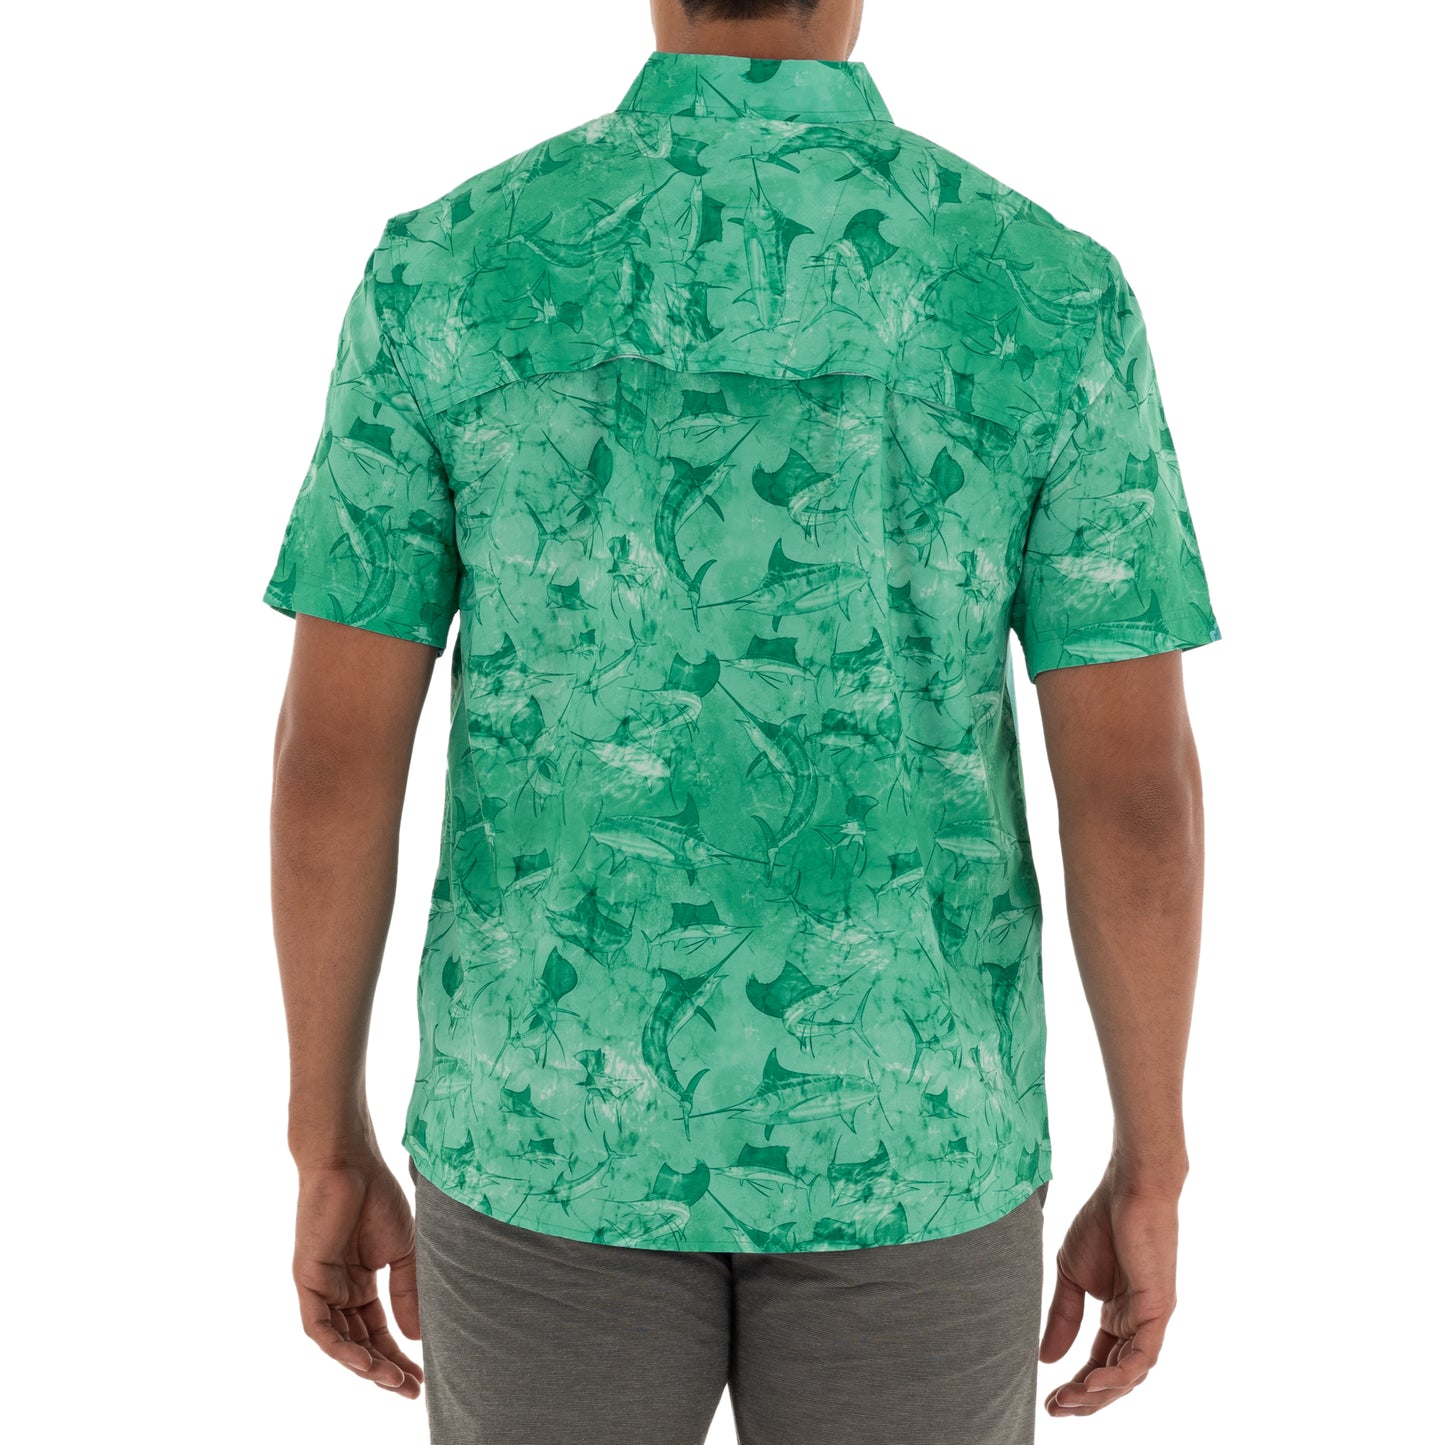 Men's Short Sleeve Printed Turquoise Fishing Shirt View 4